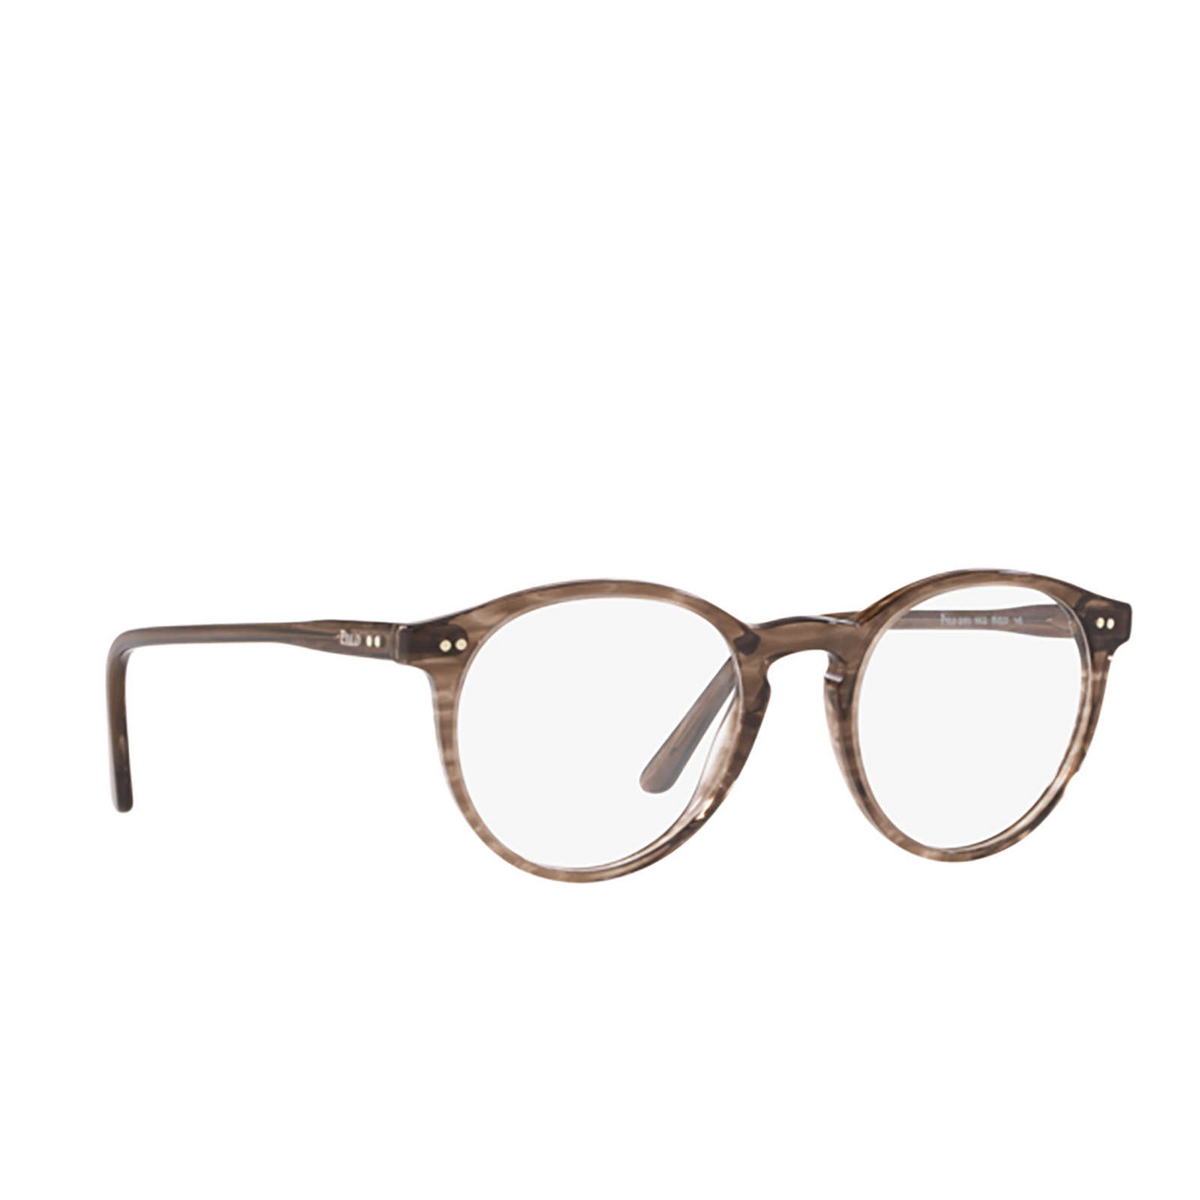 Polo Ralph Lauren® Round Eyeglasses: PH2083 color Shiny Striped Brown 5822 - three-quarters view.